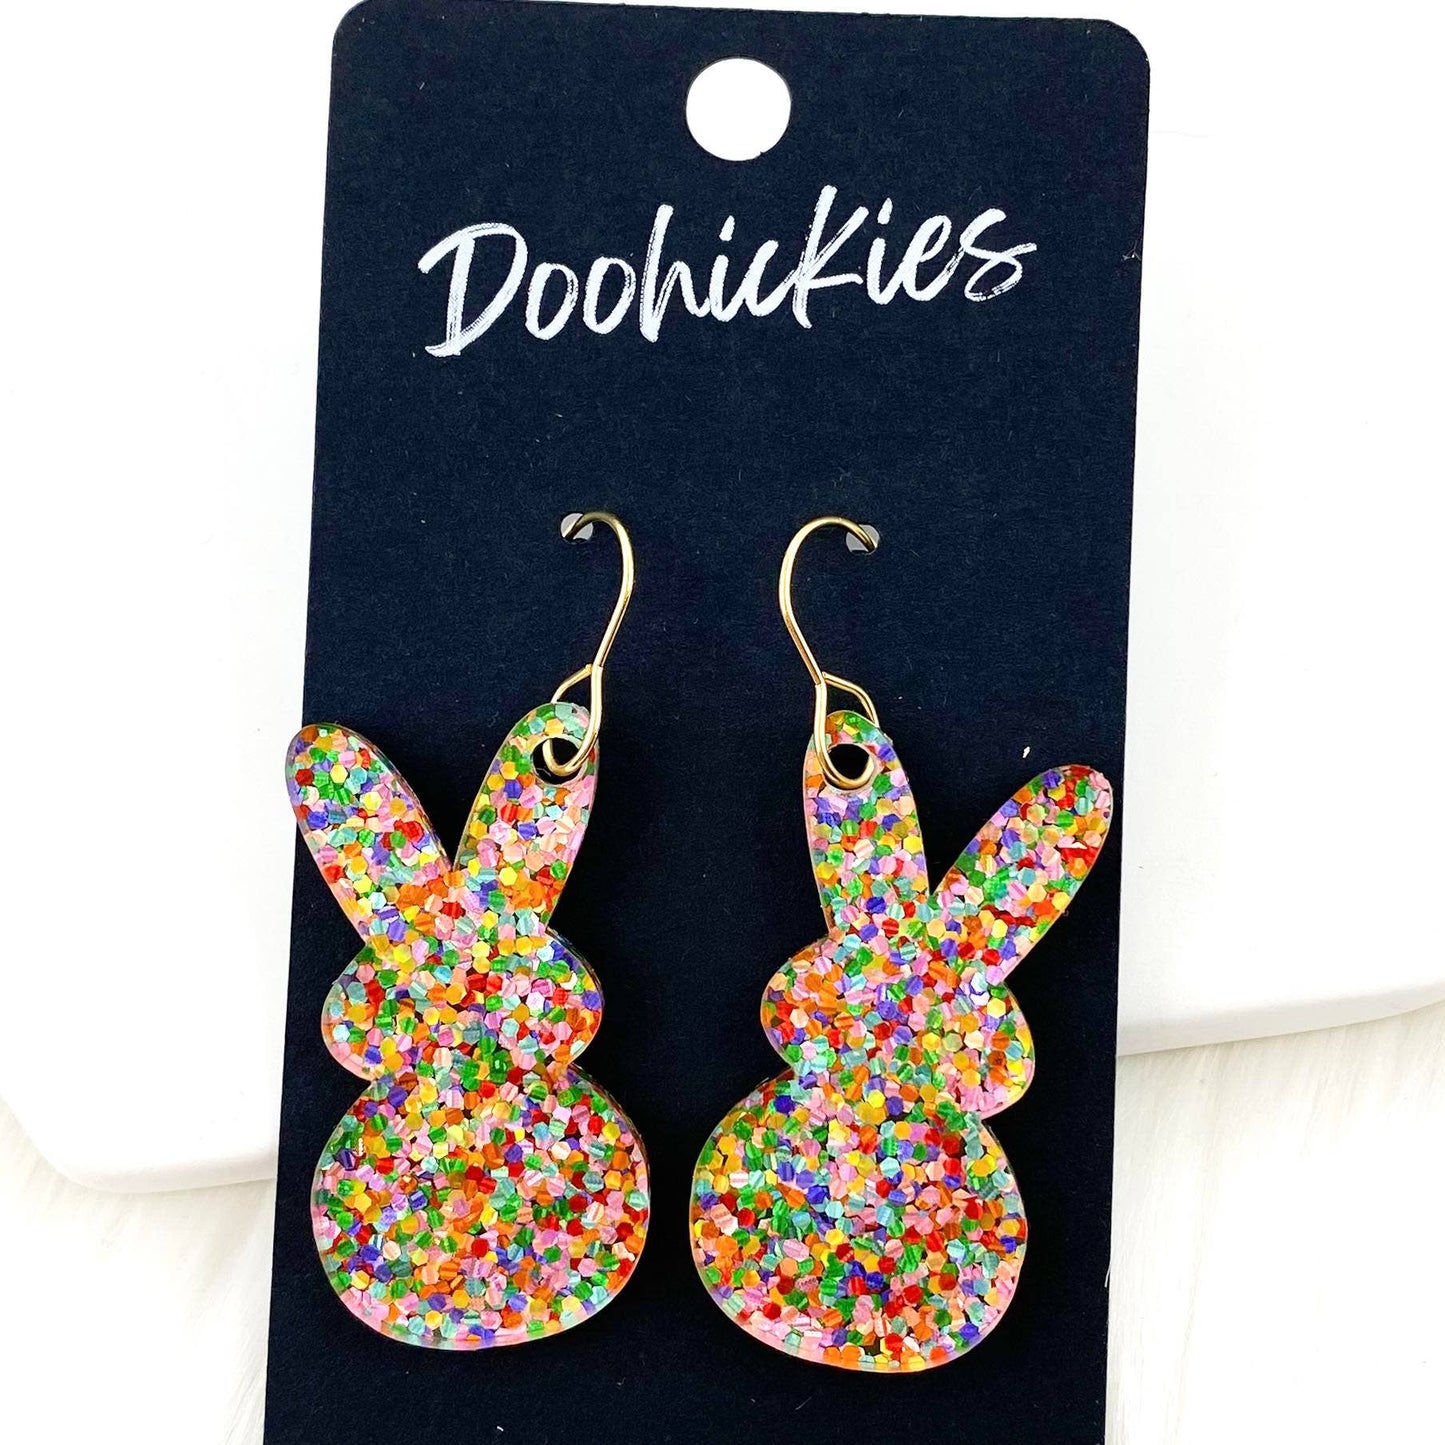 Doohickies - 1.5" Confetti Marshmallow Bunnies -Easter Earrings: Daisy Candy